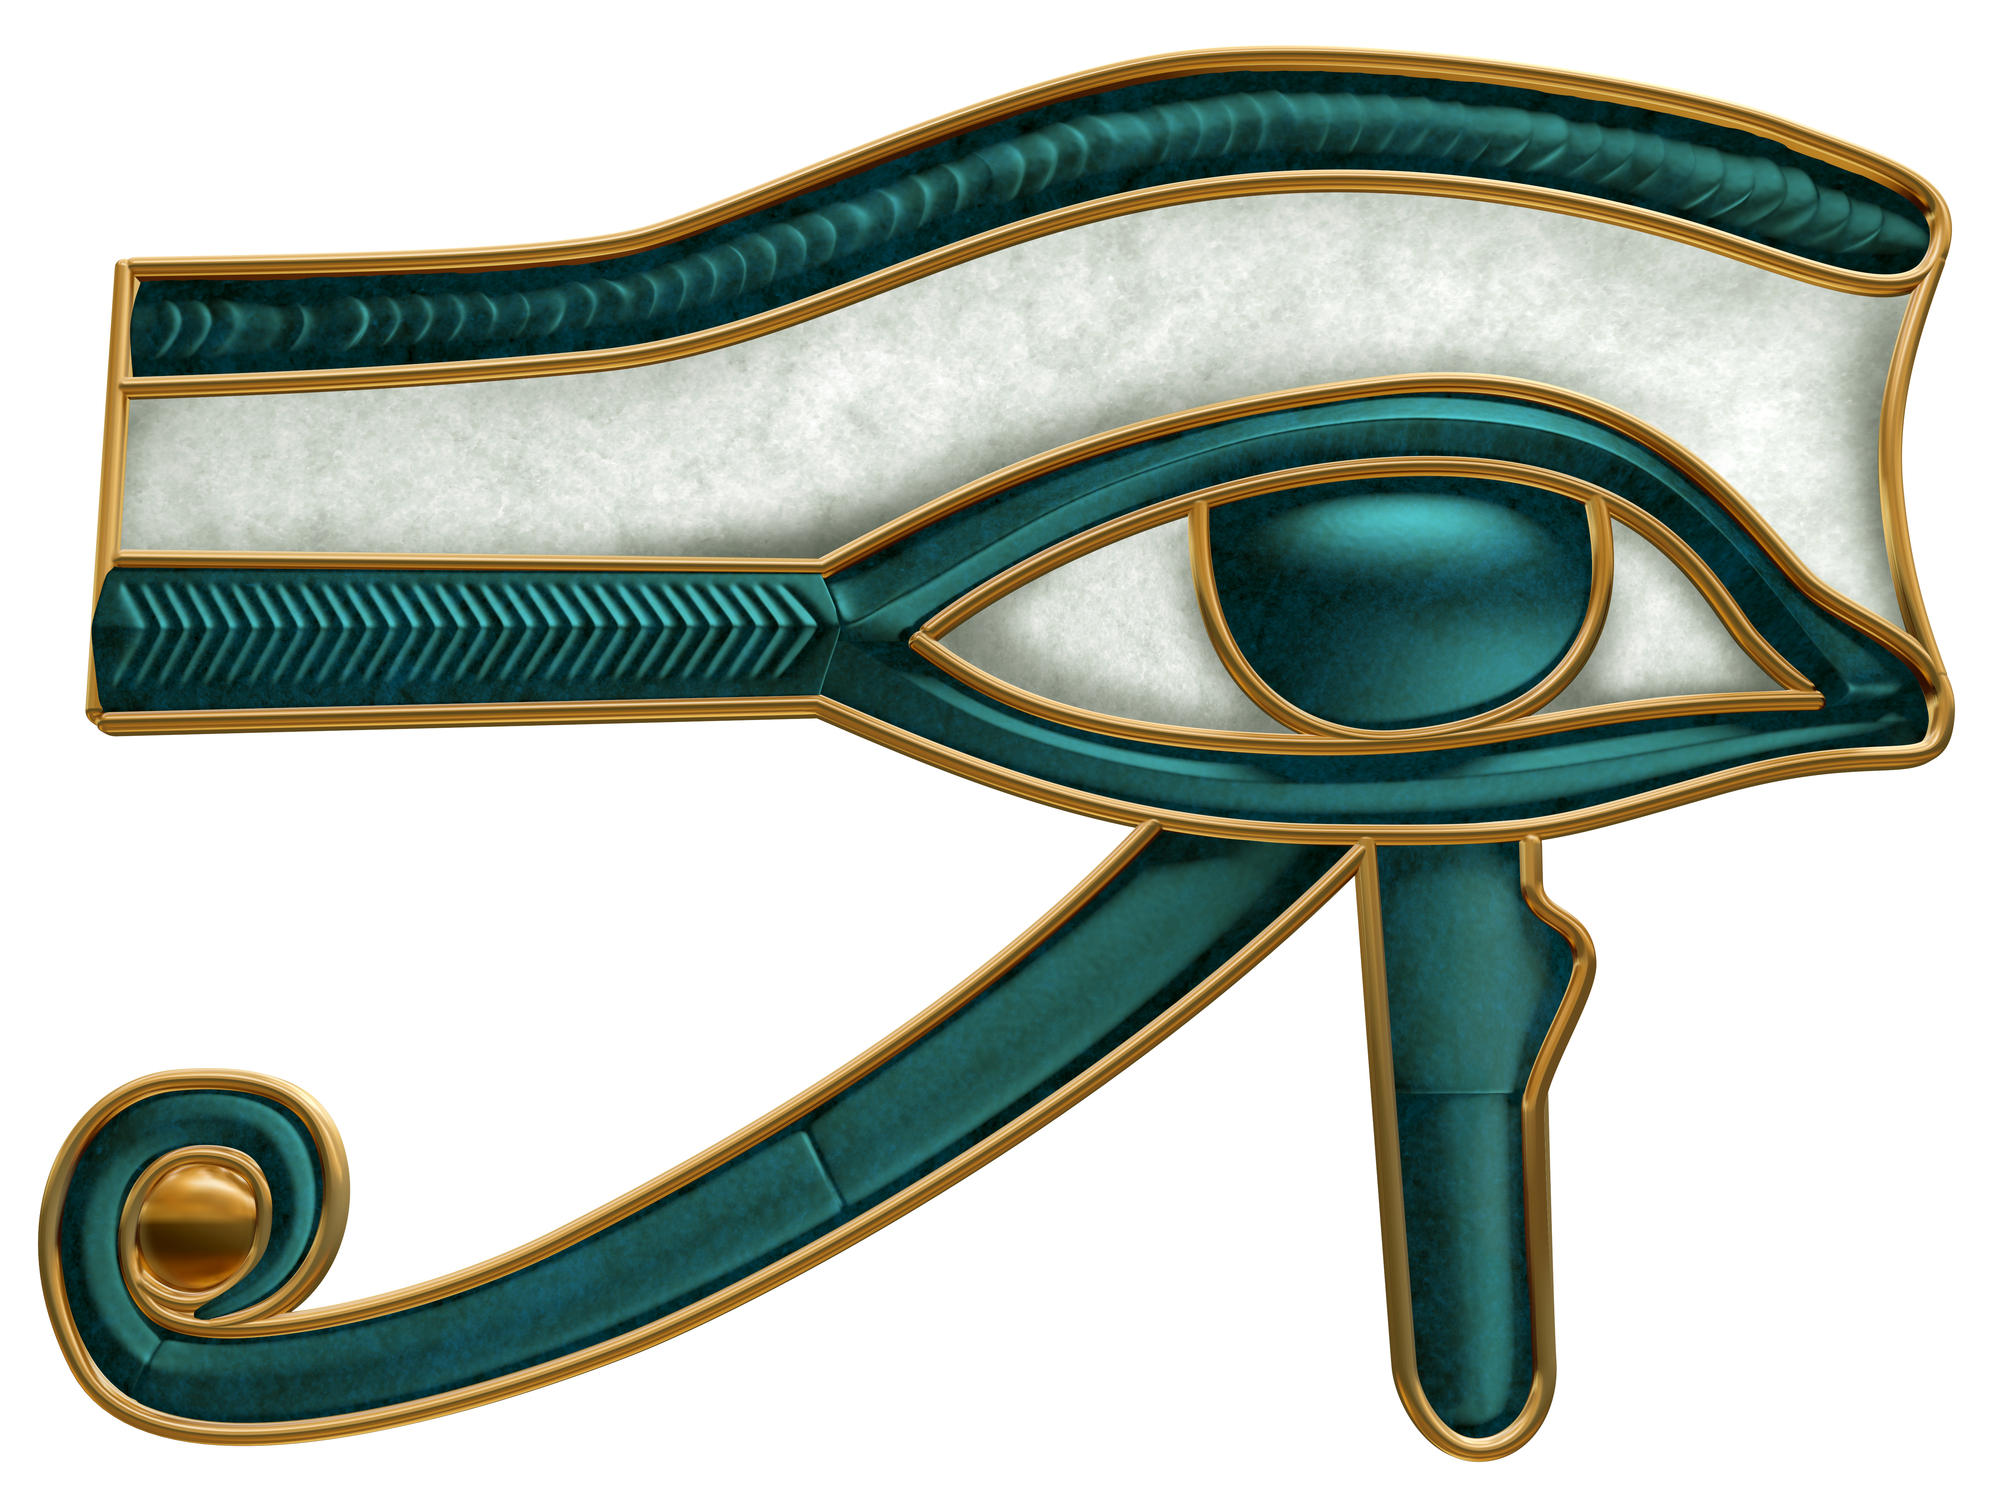 Illustration of the ancient Egyptian Eye of Horus symbol